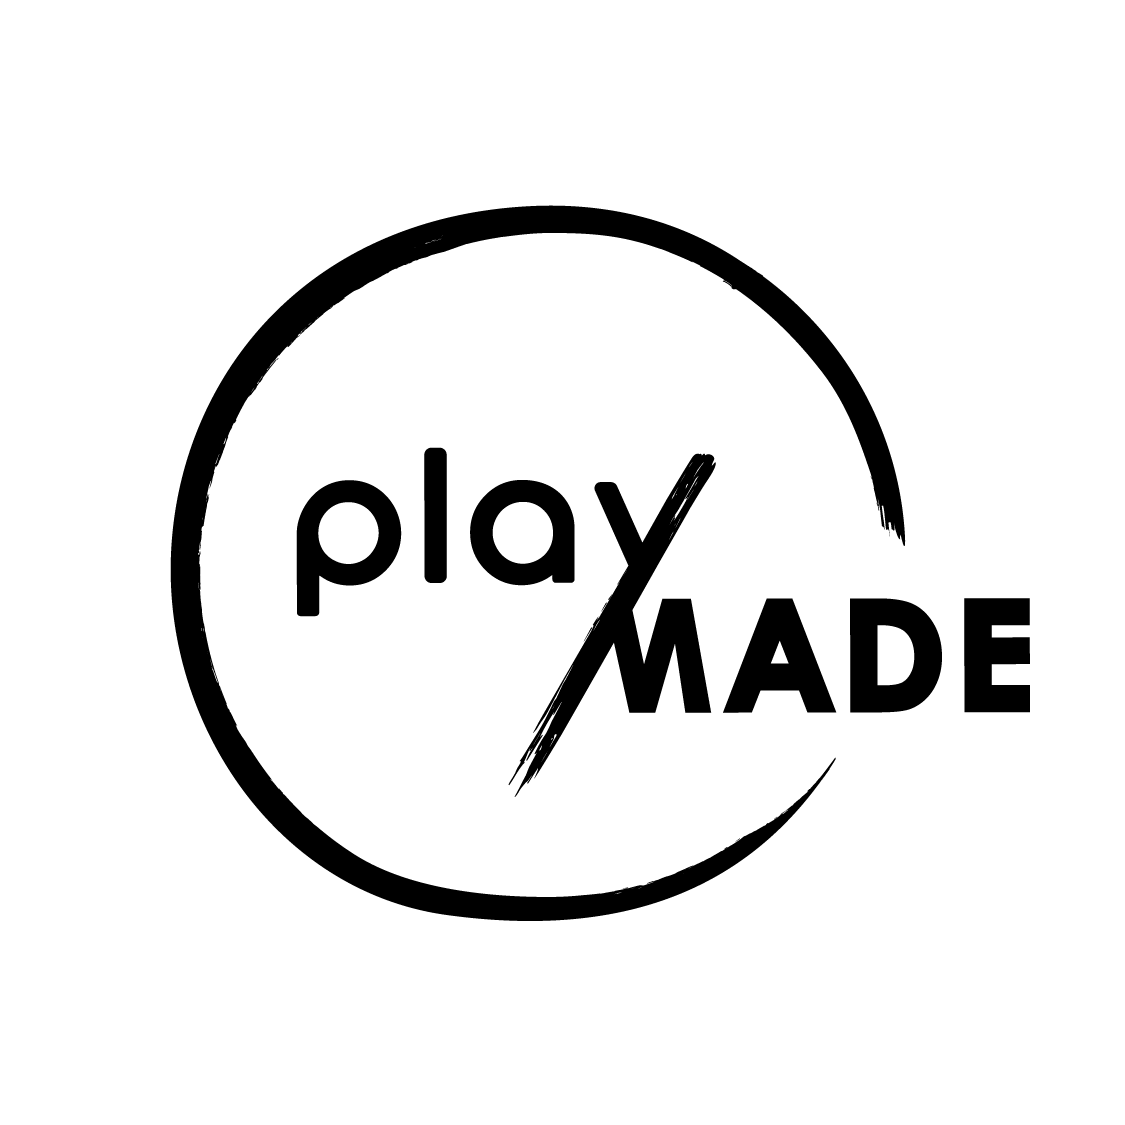 PlayMade-Round Black Logo.png